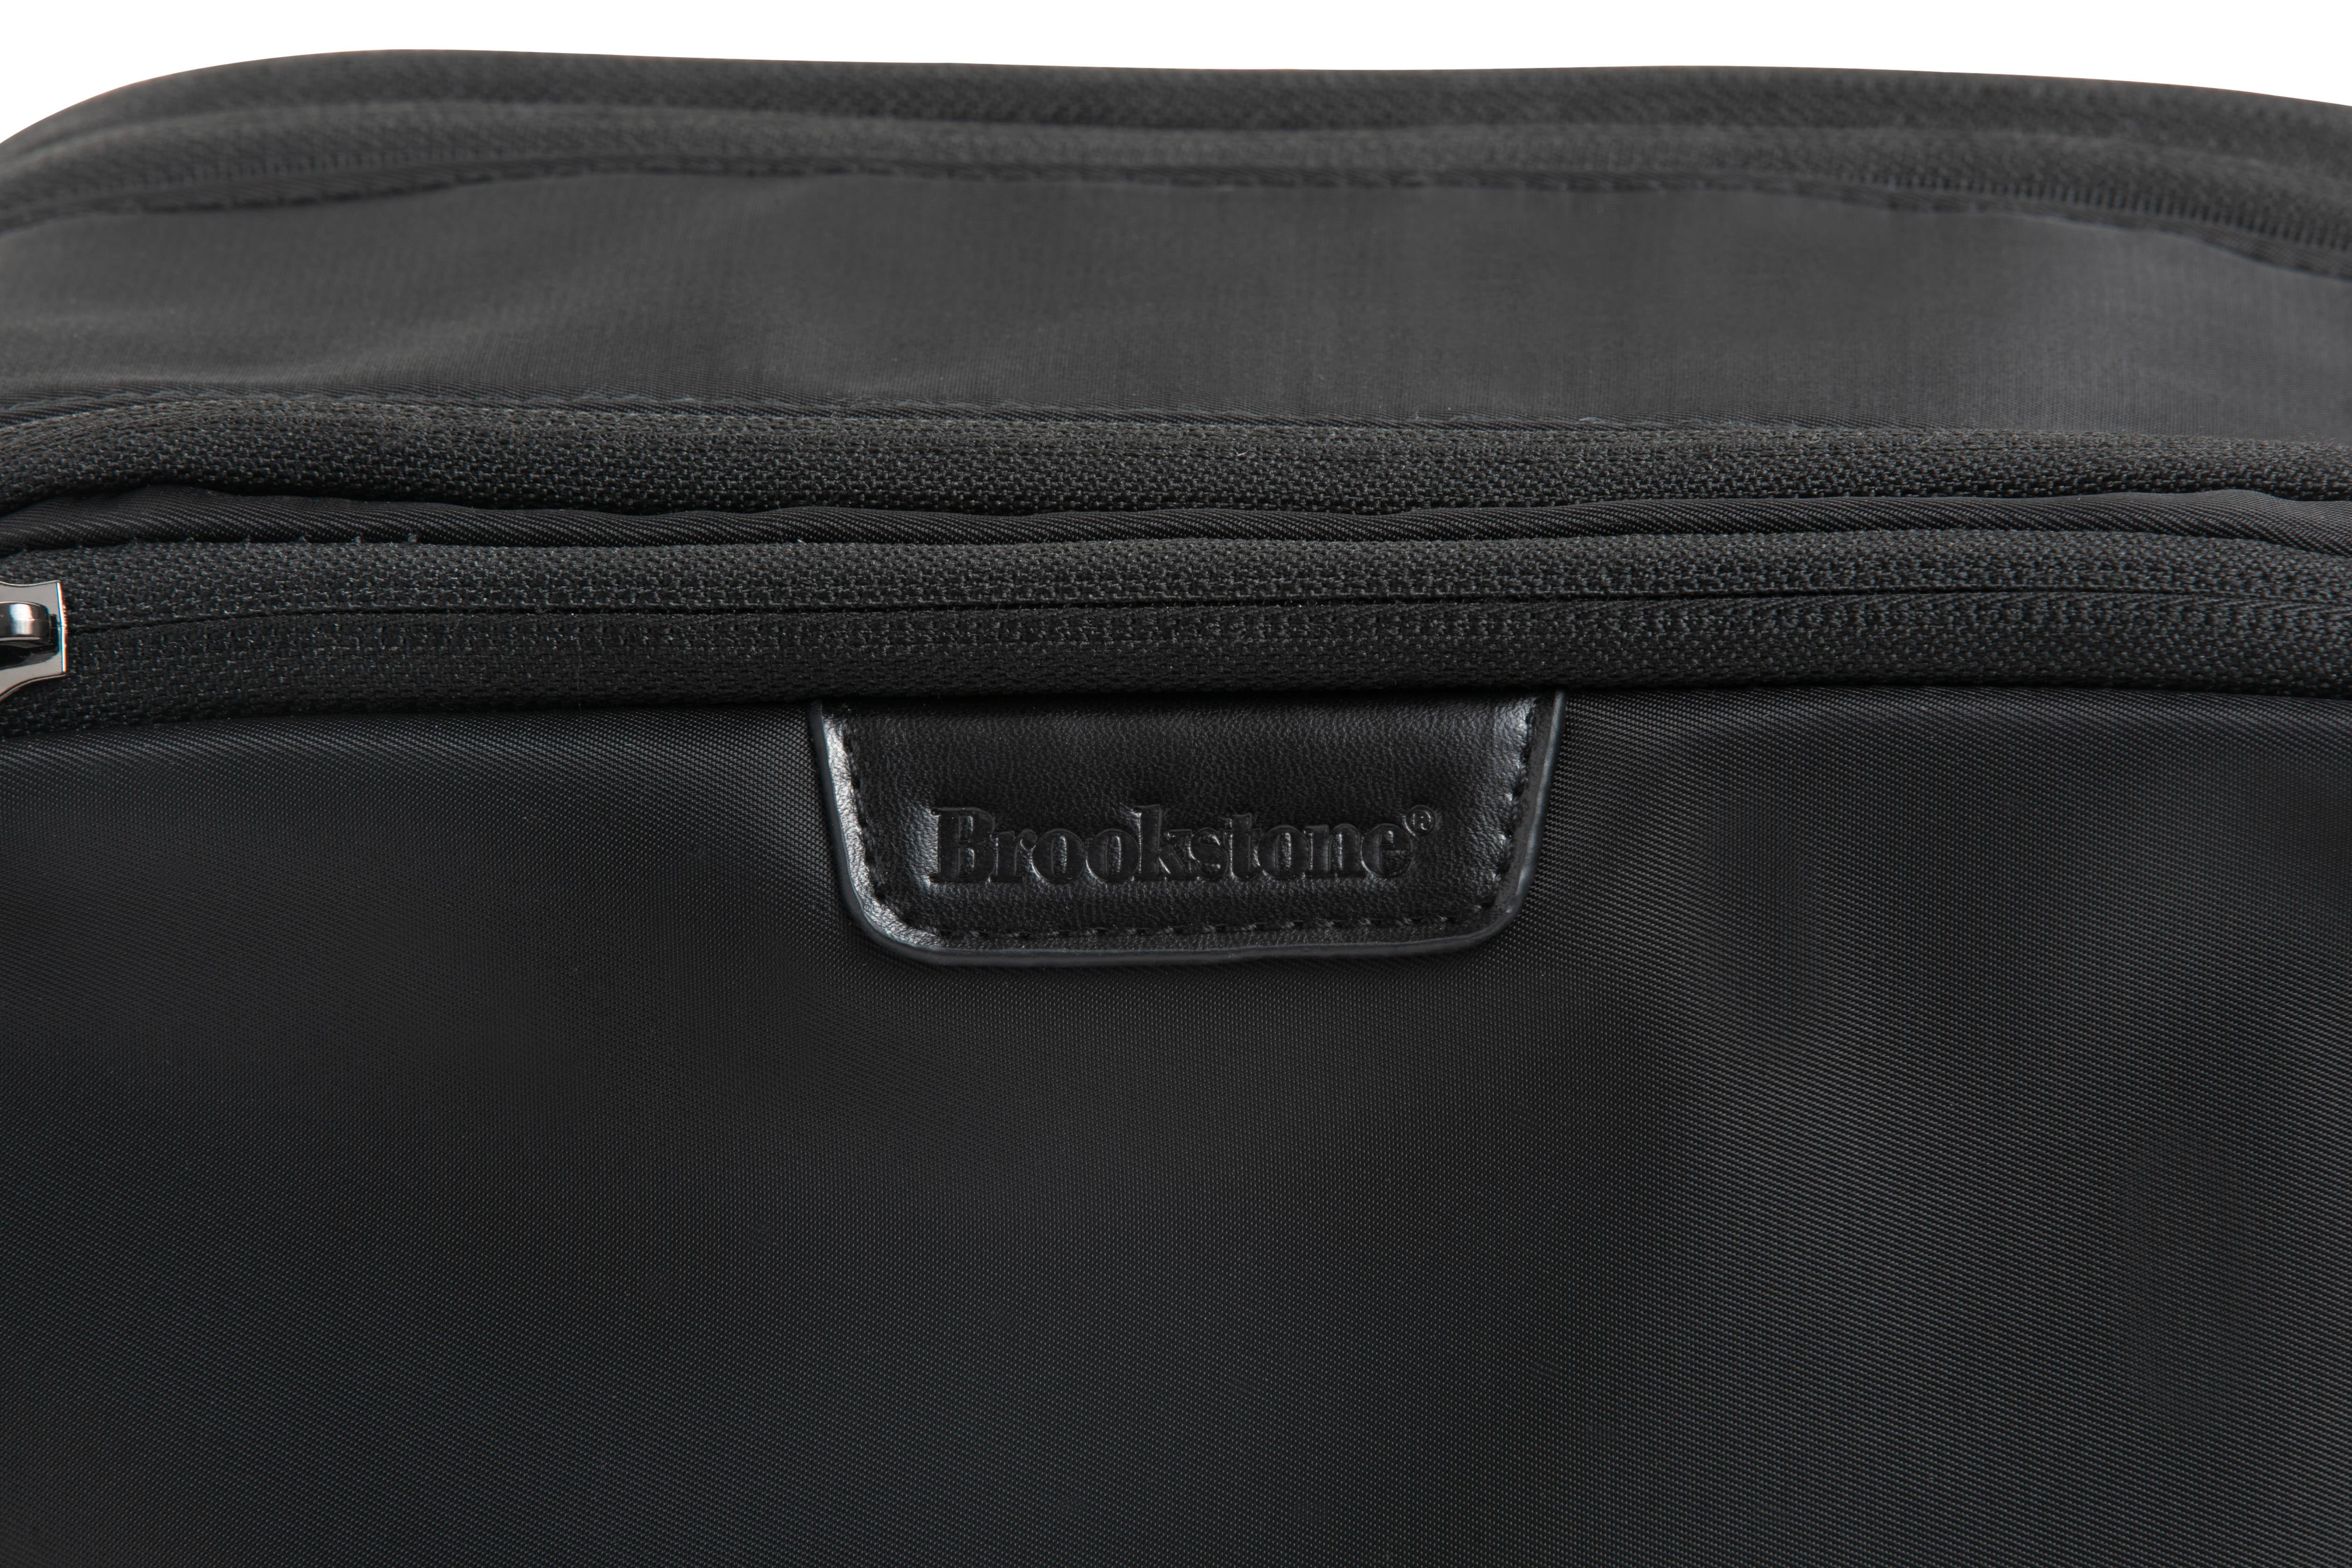 Brookstone Travel Tech Storage Bag - Accessories